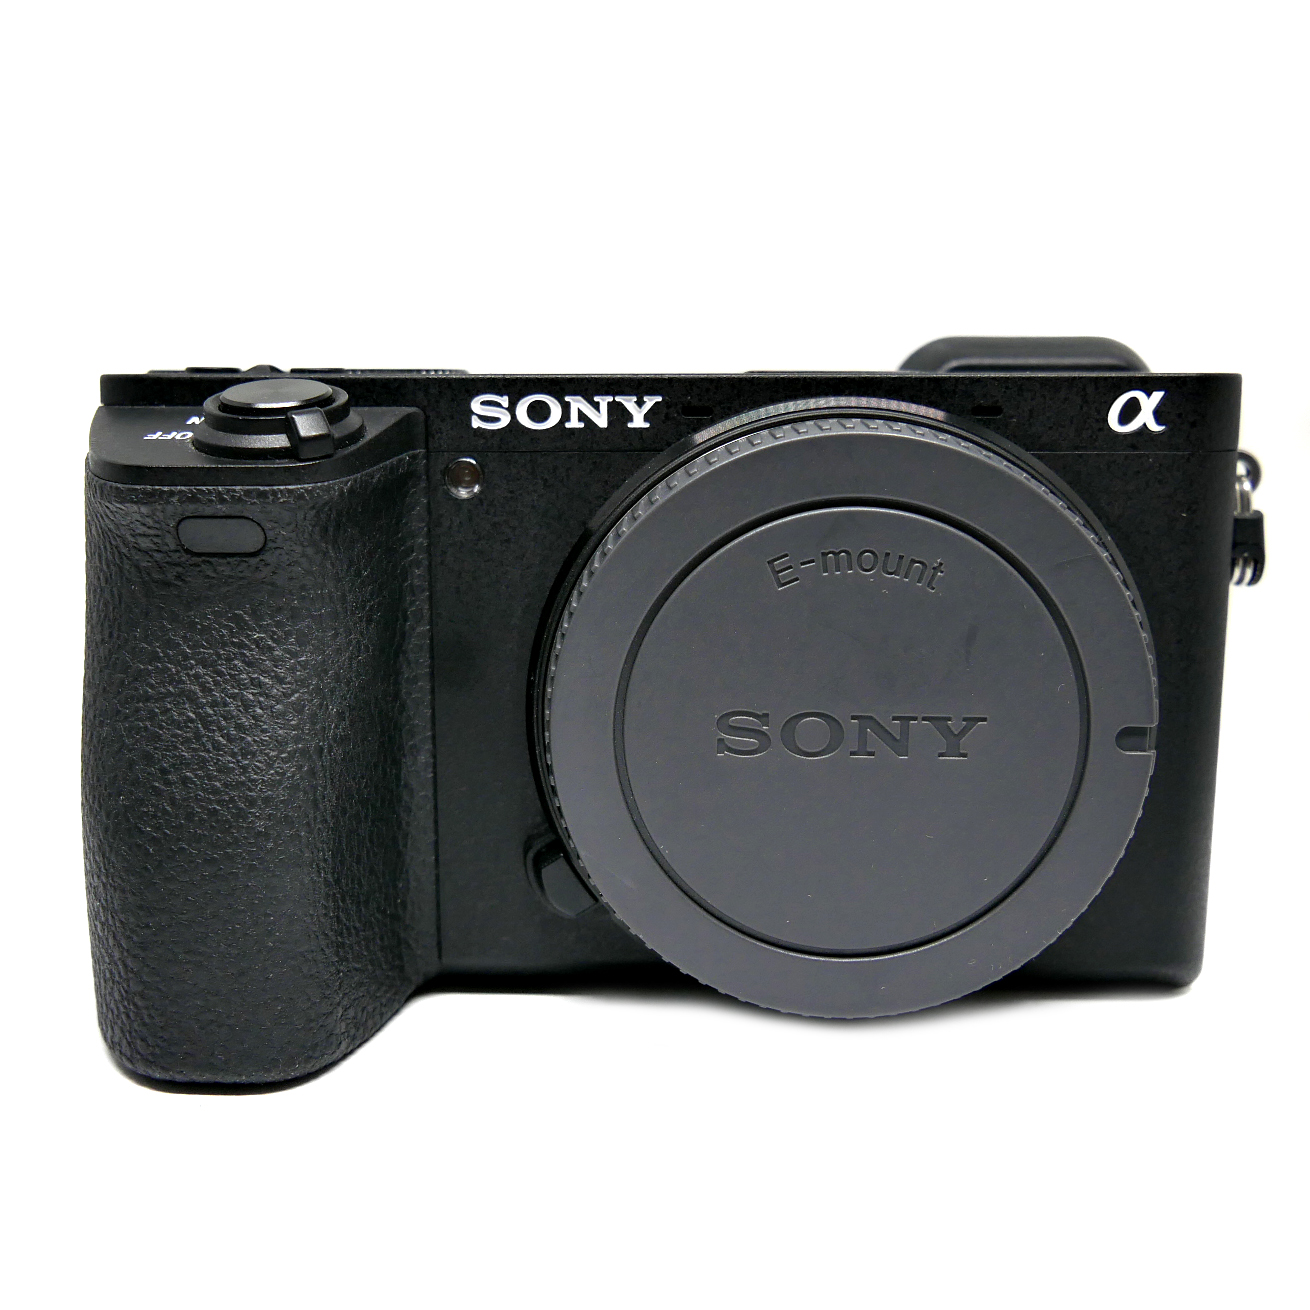 (Myyty) Sony a6500 runko (SC:1430) (käytetty)